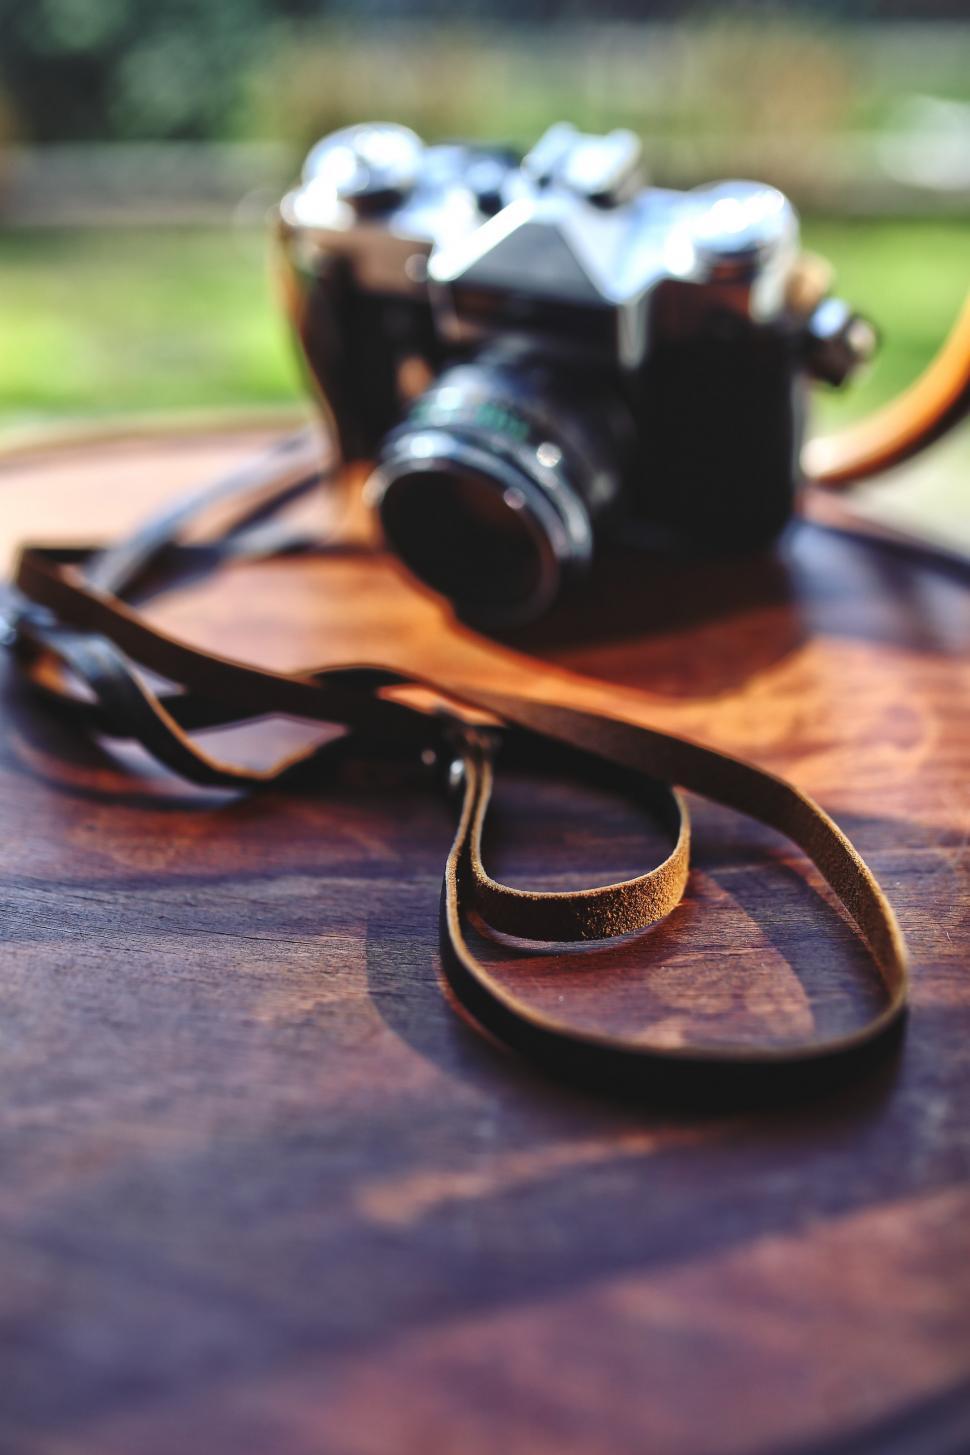 Free Image of Camera Old leather strap vintage wooden zenit business 